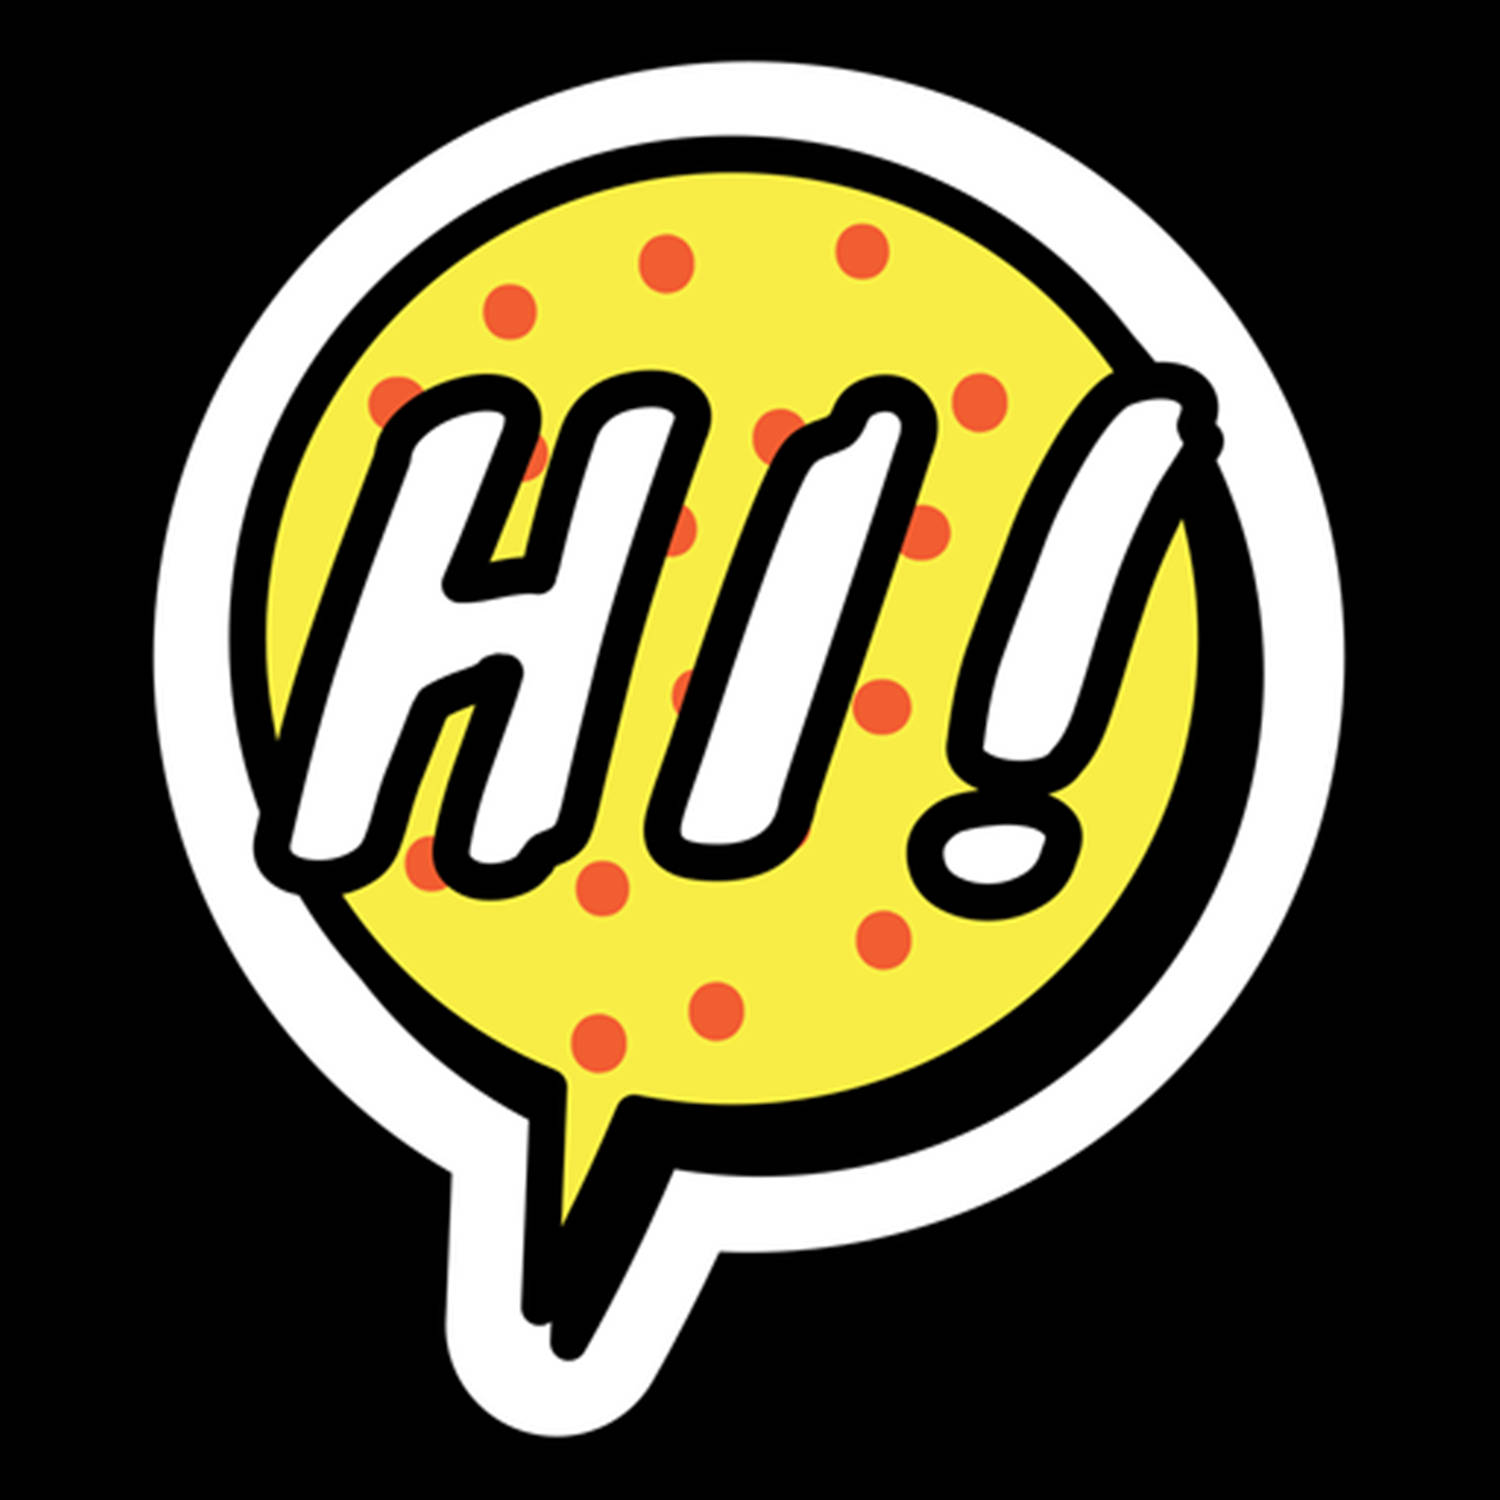 Vibrant Yellow Speech Bubble Saying "Hi" Wallpaper